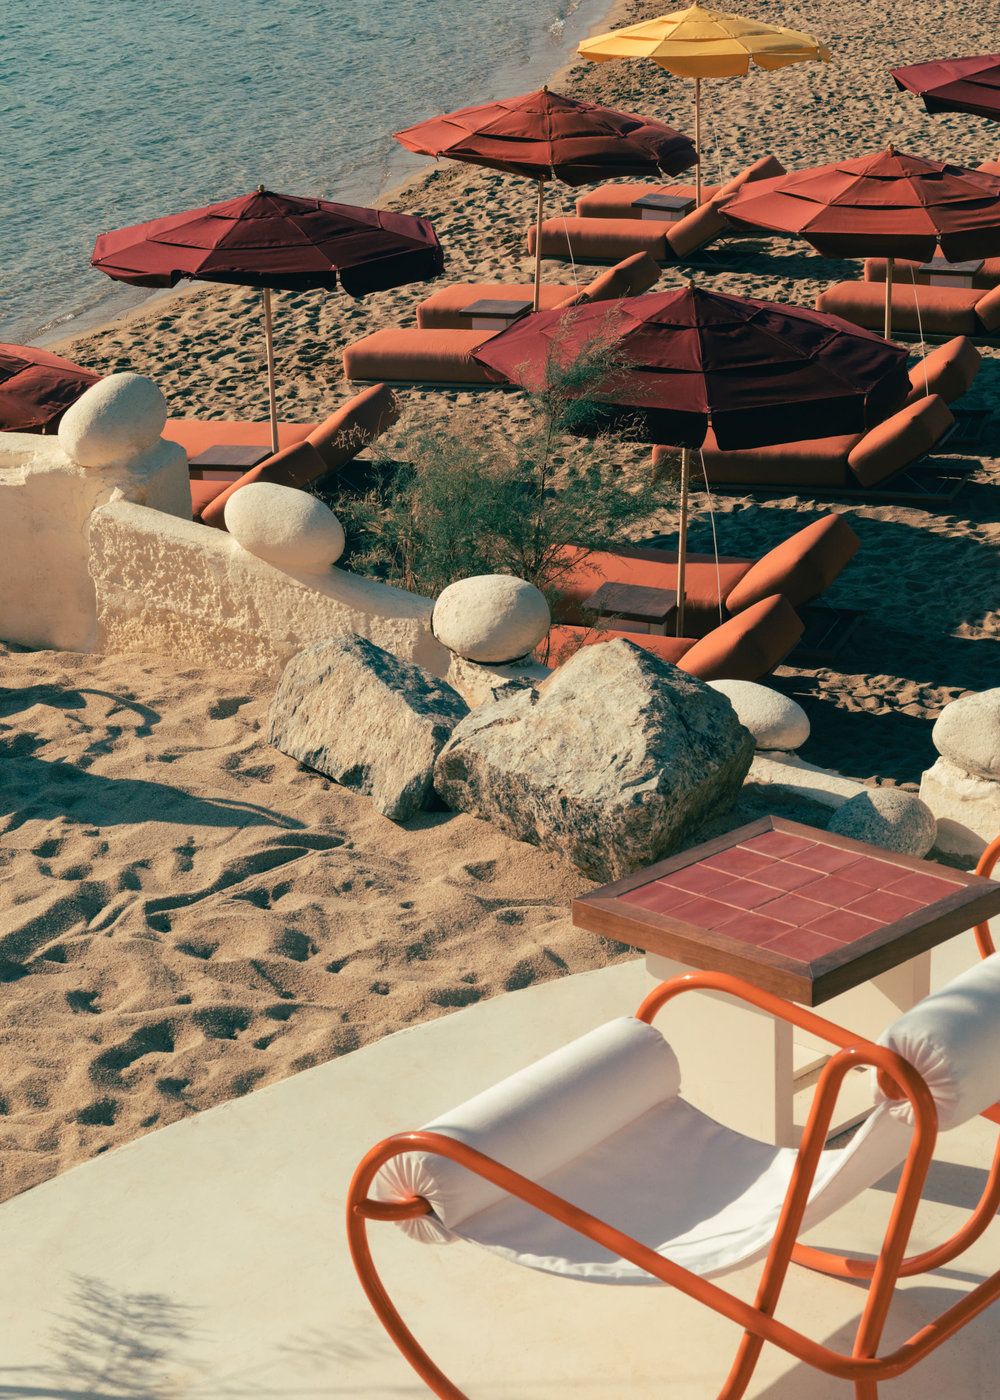 Ftelia Beach Club in Mykonos by Fabrizio Casiraghi